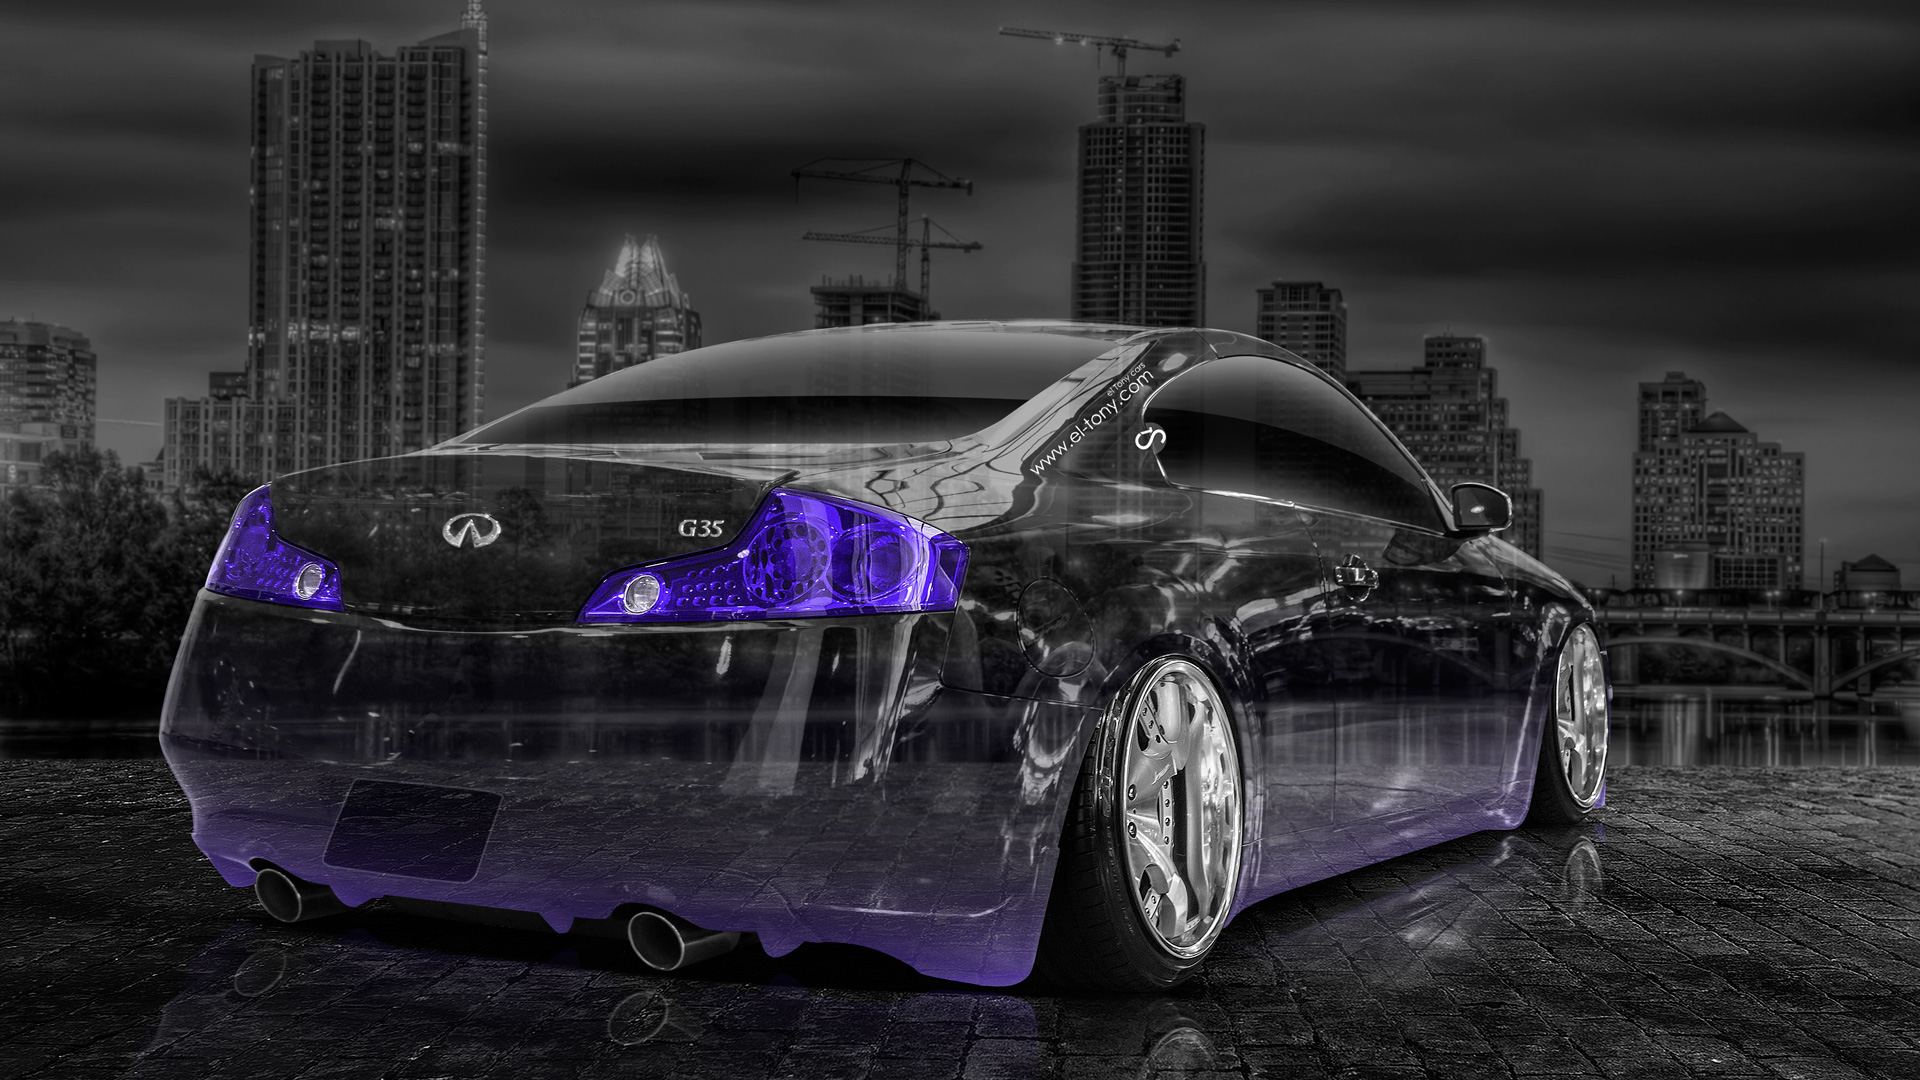 Infiniti G35 Crystal City Car Violet Neon HD Wallpaper Design By